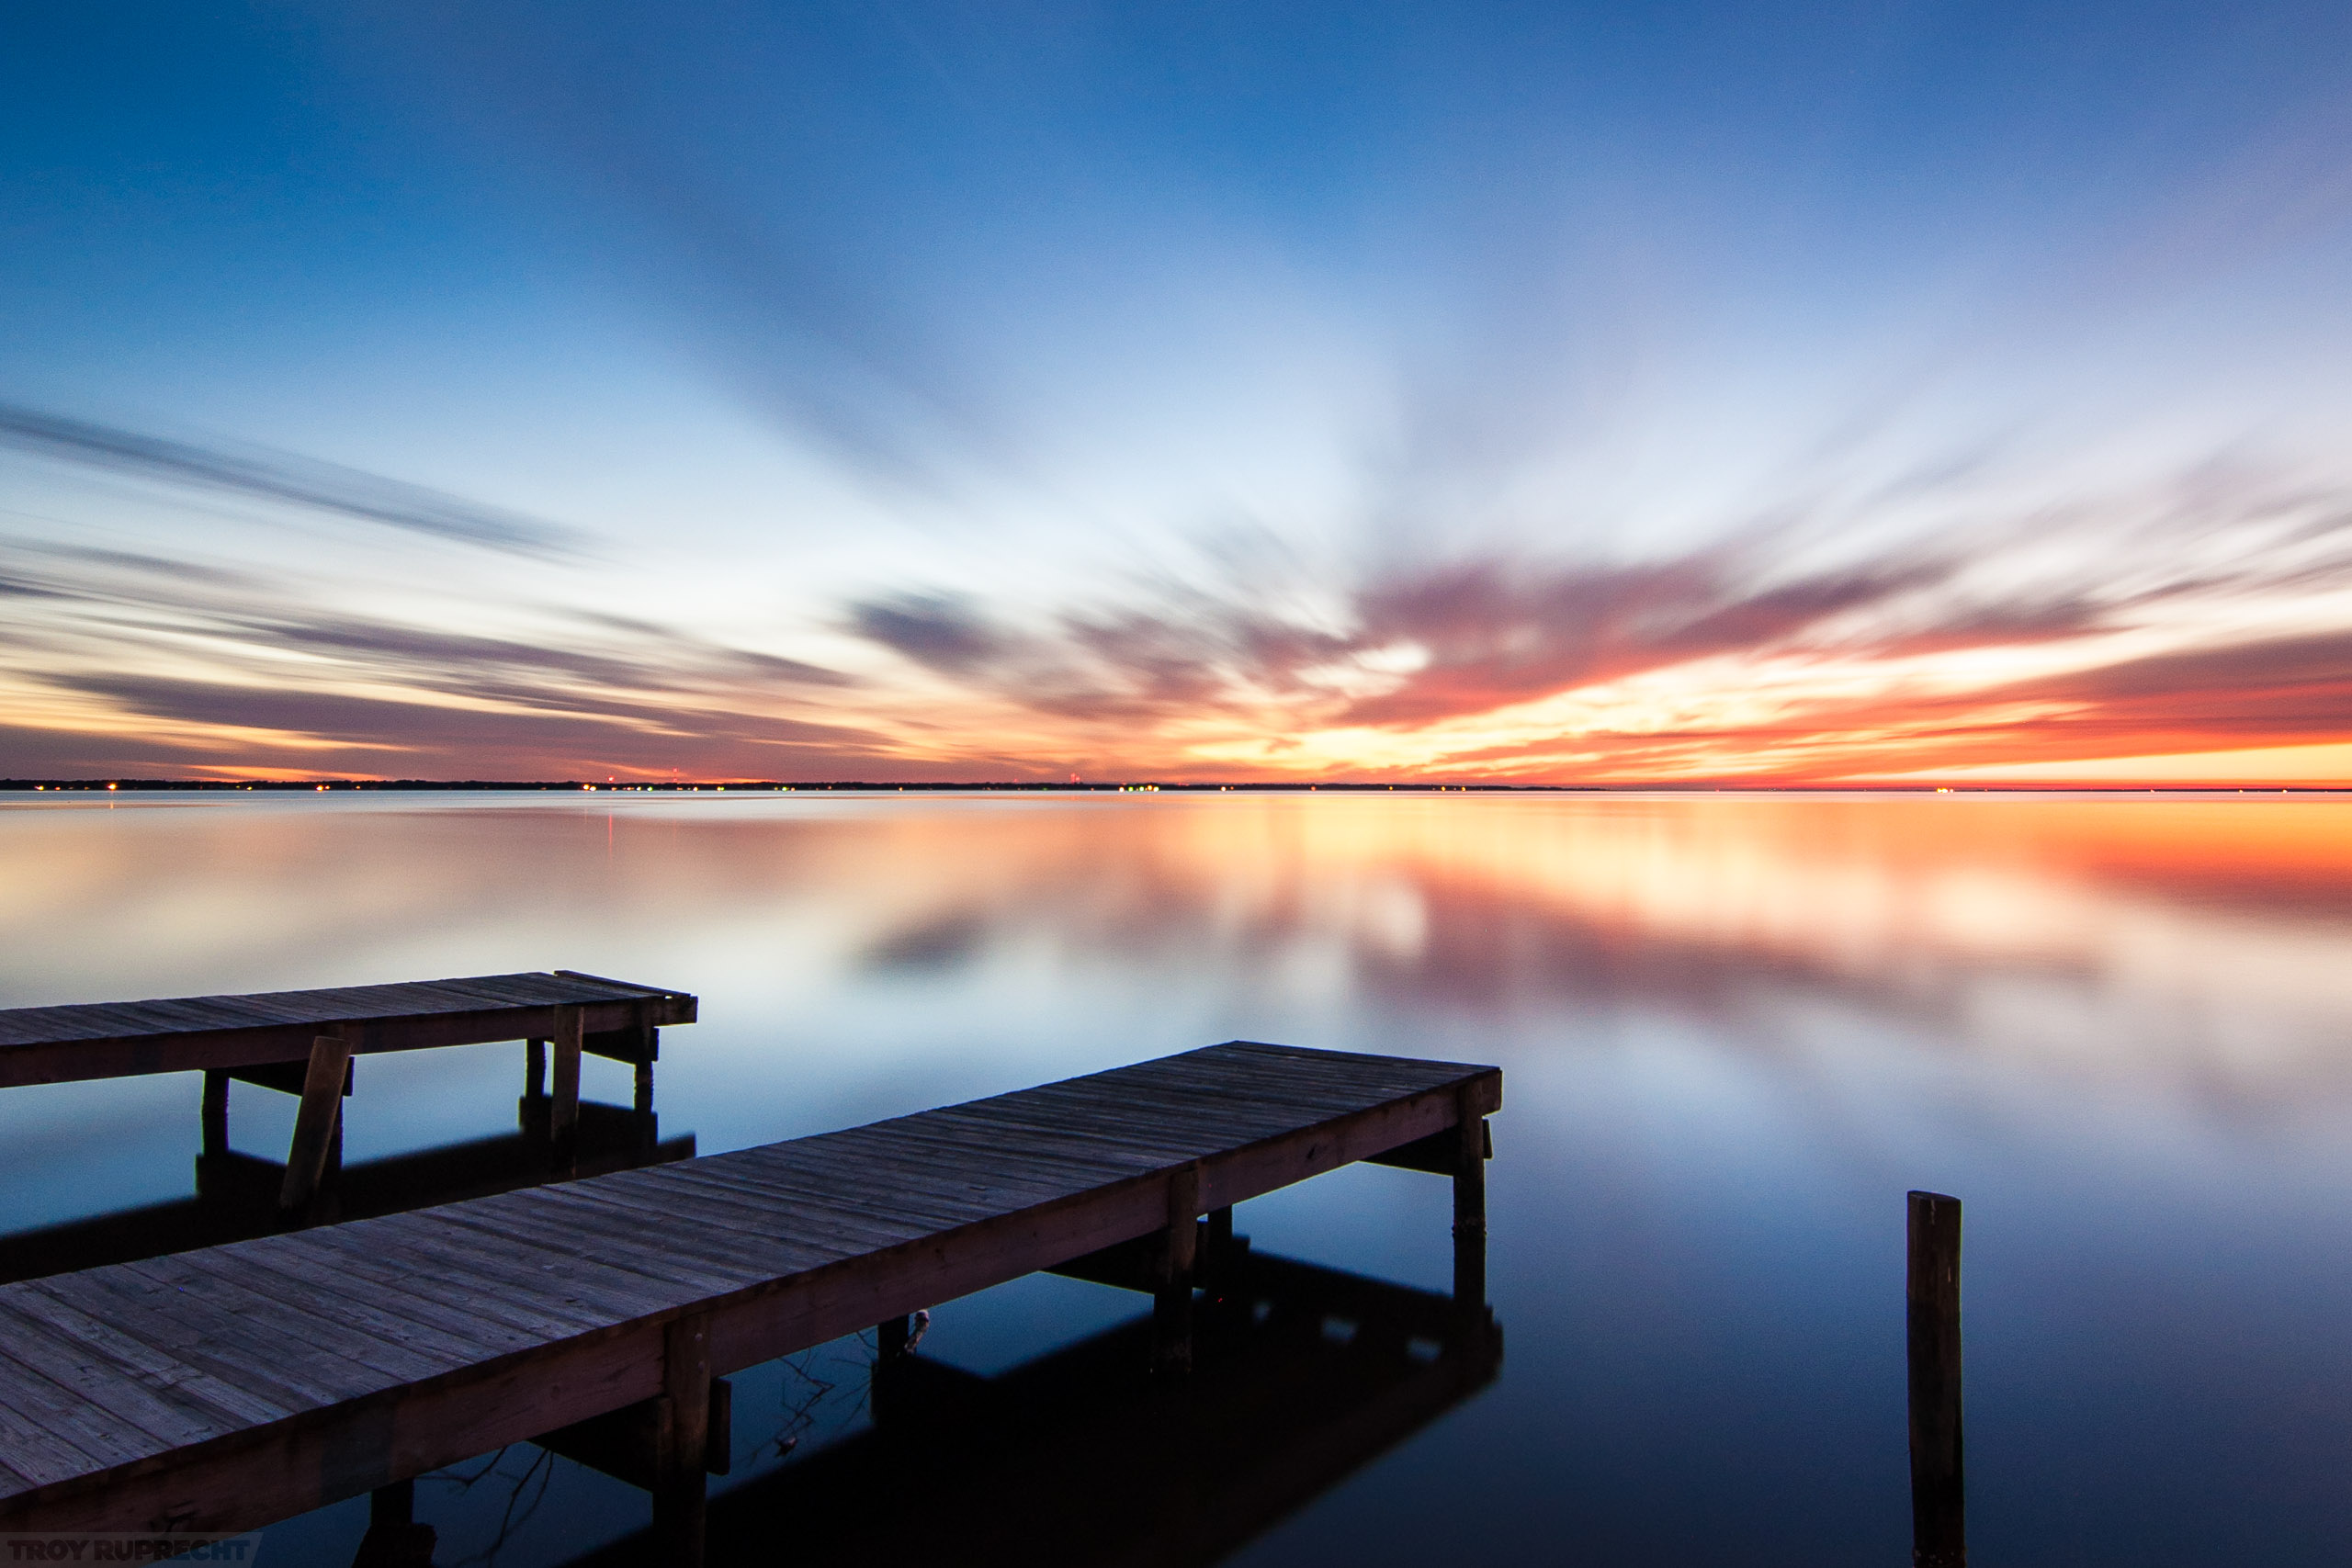 Sunset-Choctawhatchee-Bay-Docks-Bright-Colorful-Horizon-Reflection